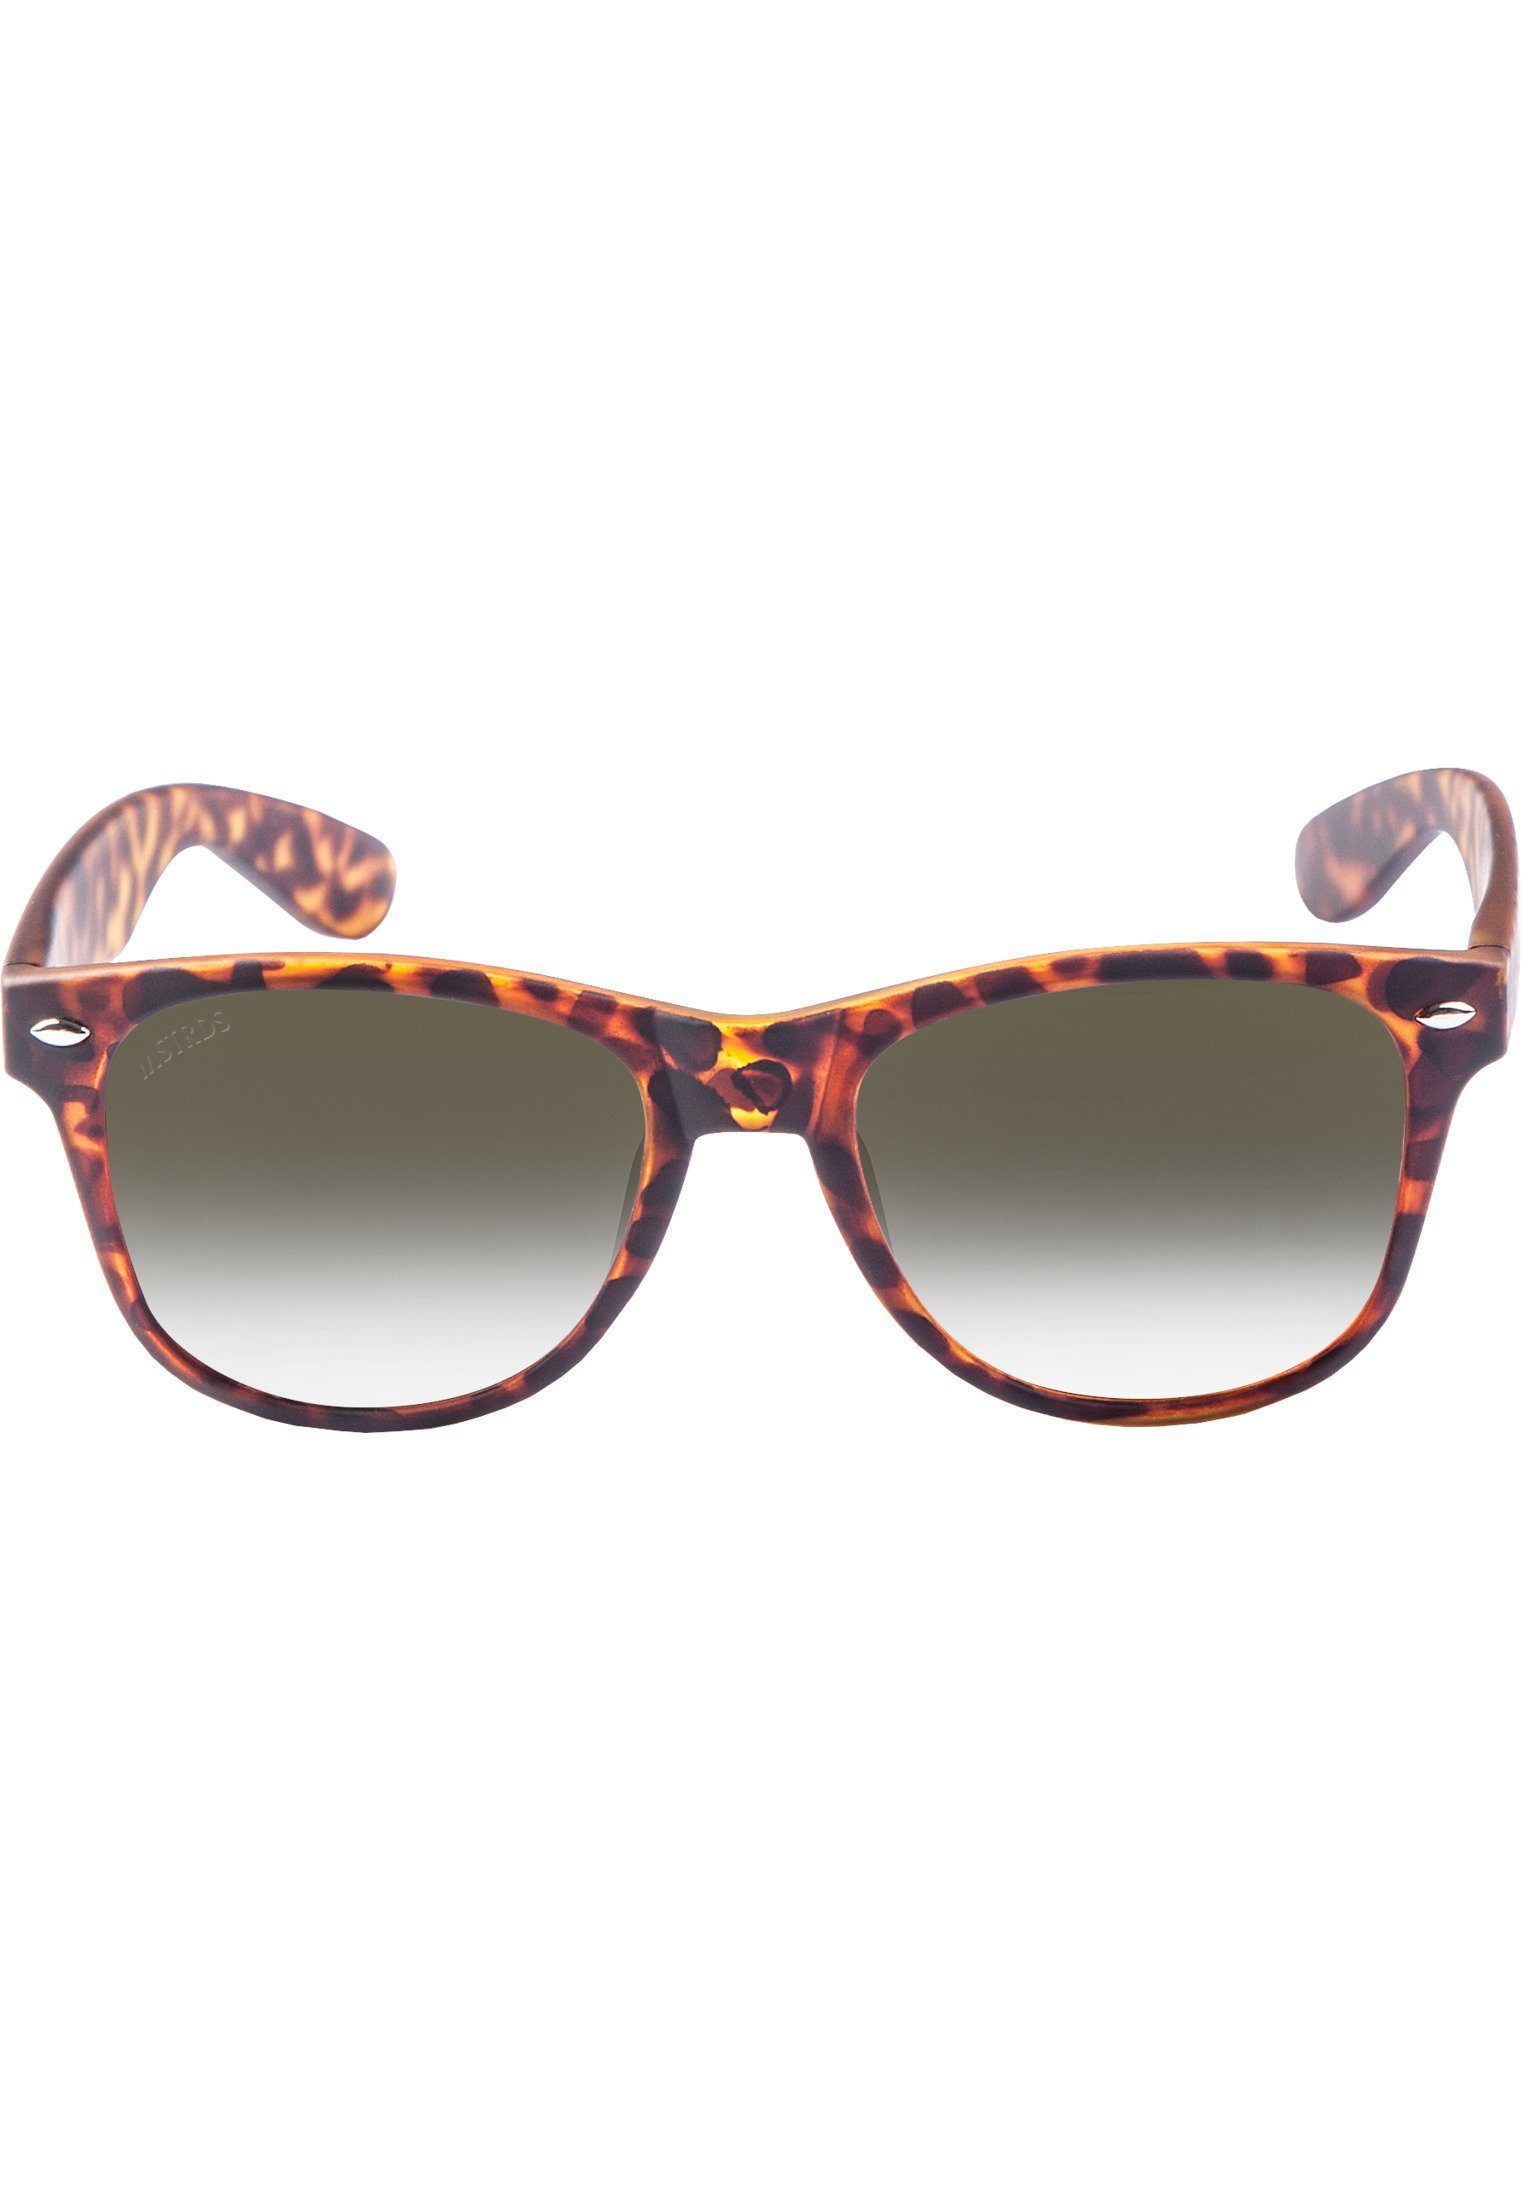 MSTRDS Sonnenbrille Sport Ideal Freien im auch für Sunglasses Accessoires geeignet Youth, Likoma